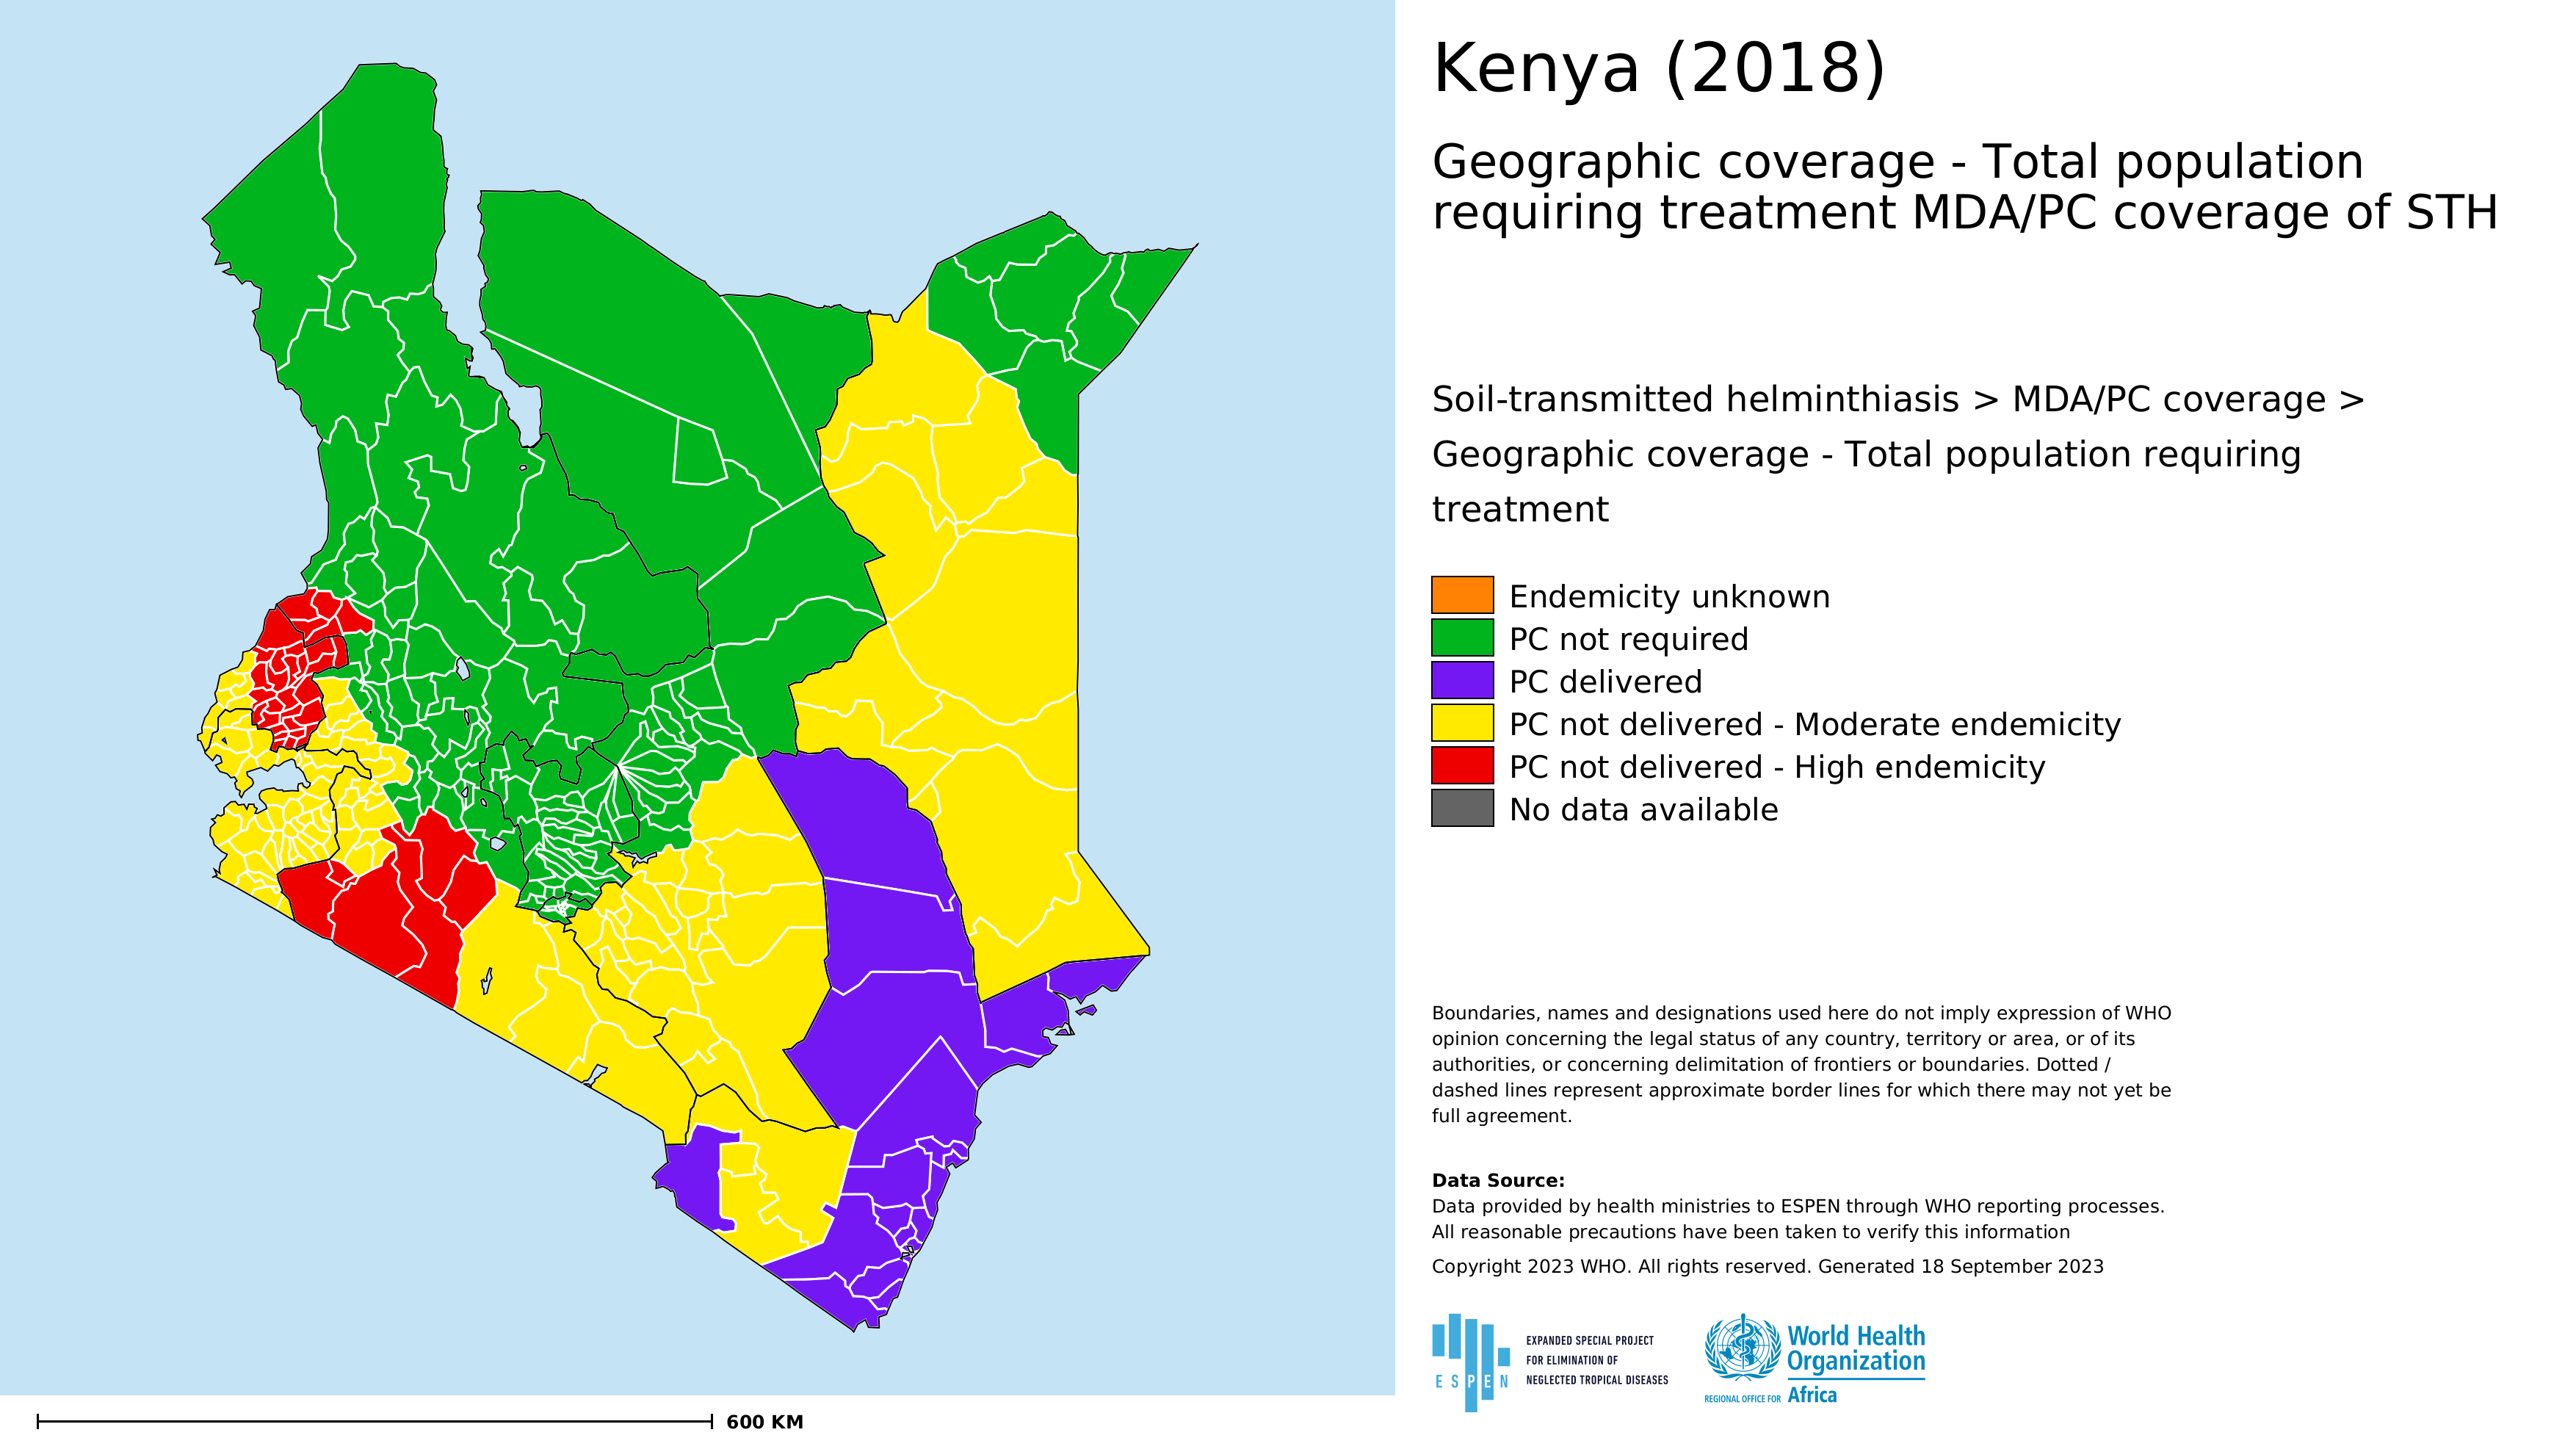 MAP Kenya Sth Iu Mda Pc Coverage Geographic Total 2018 Landscape 